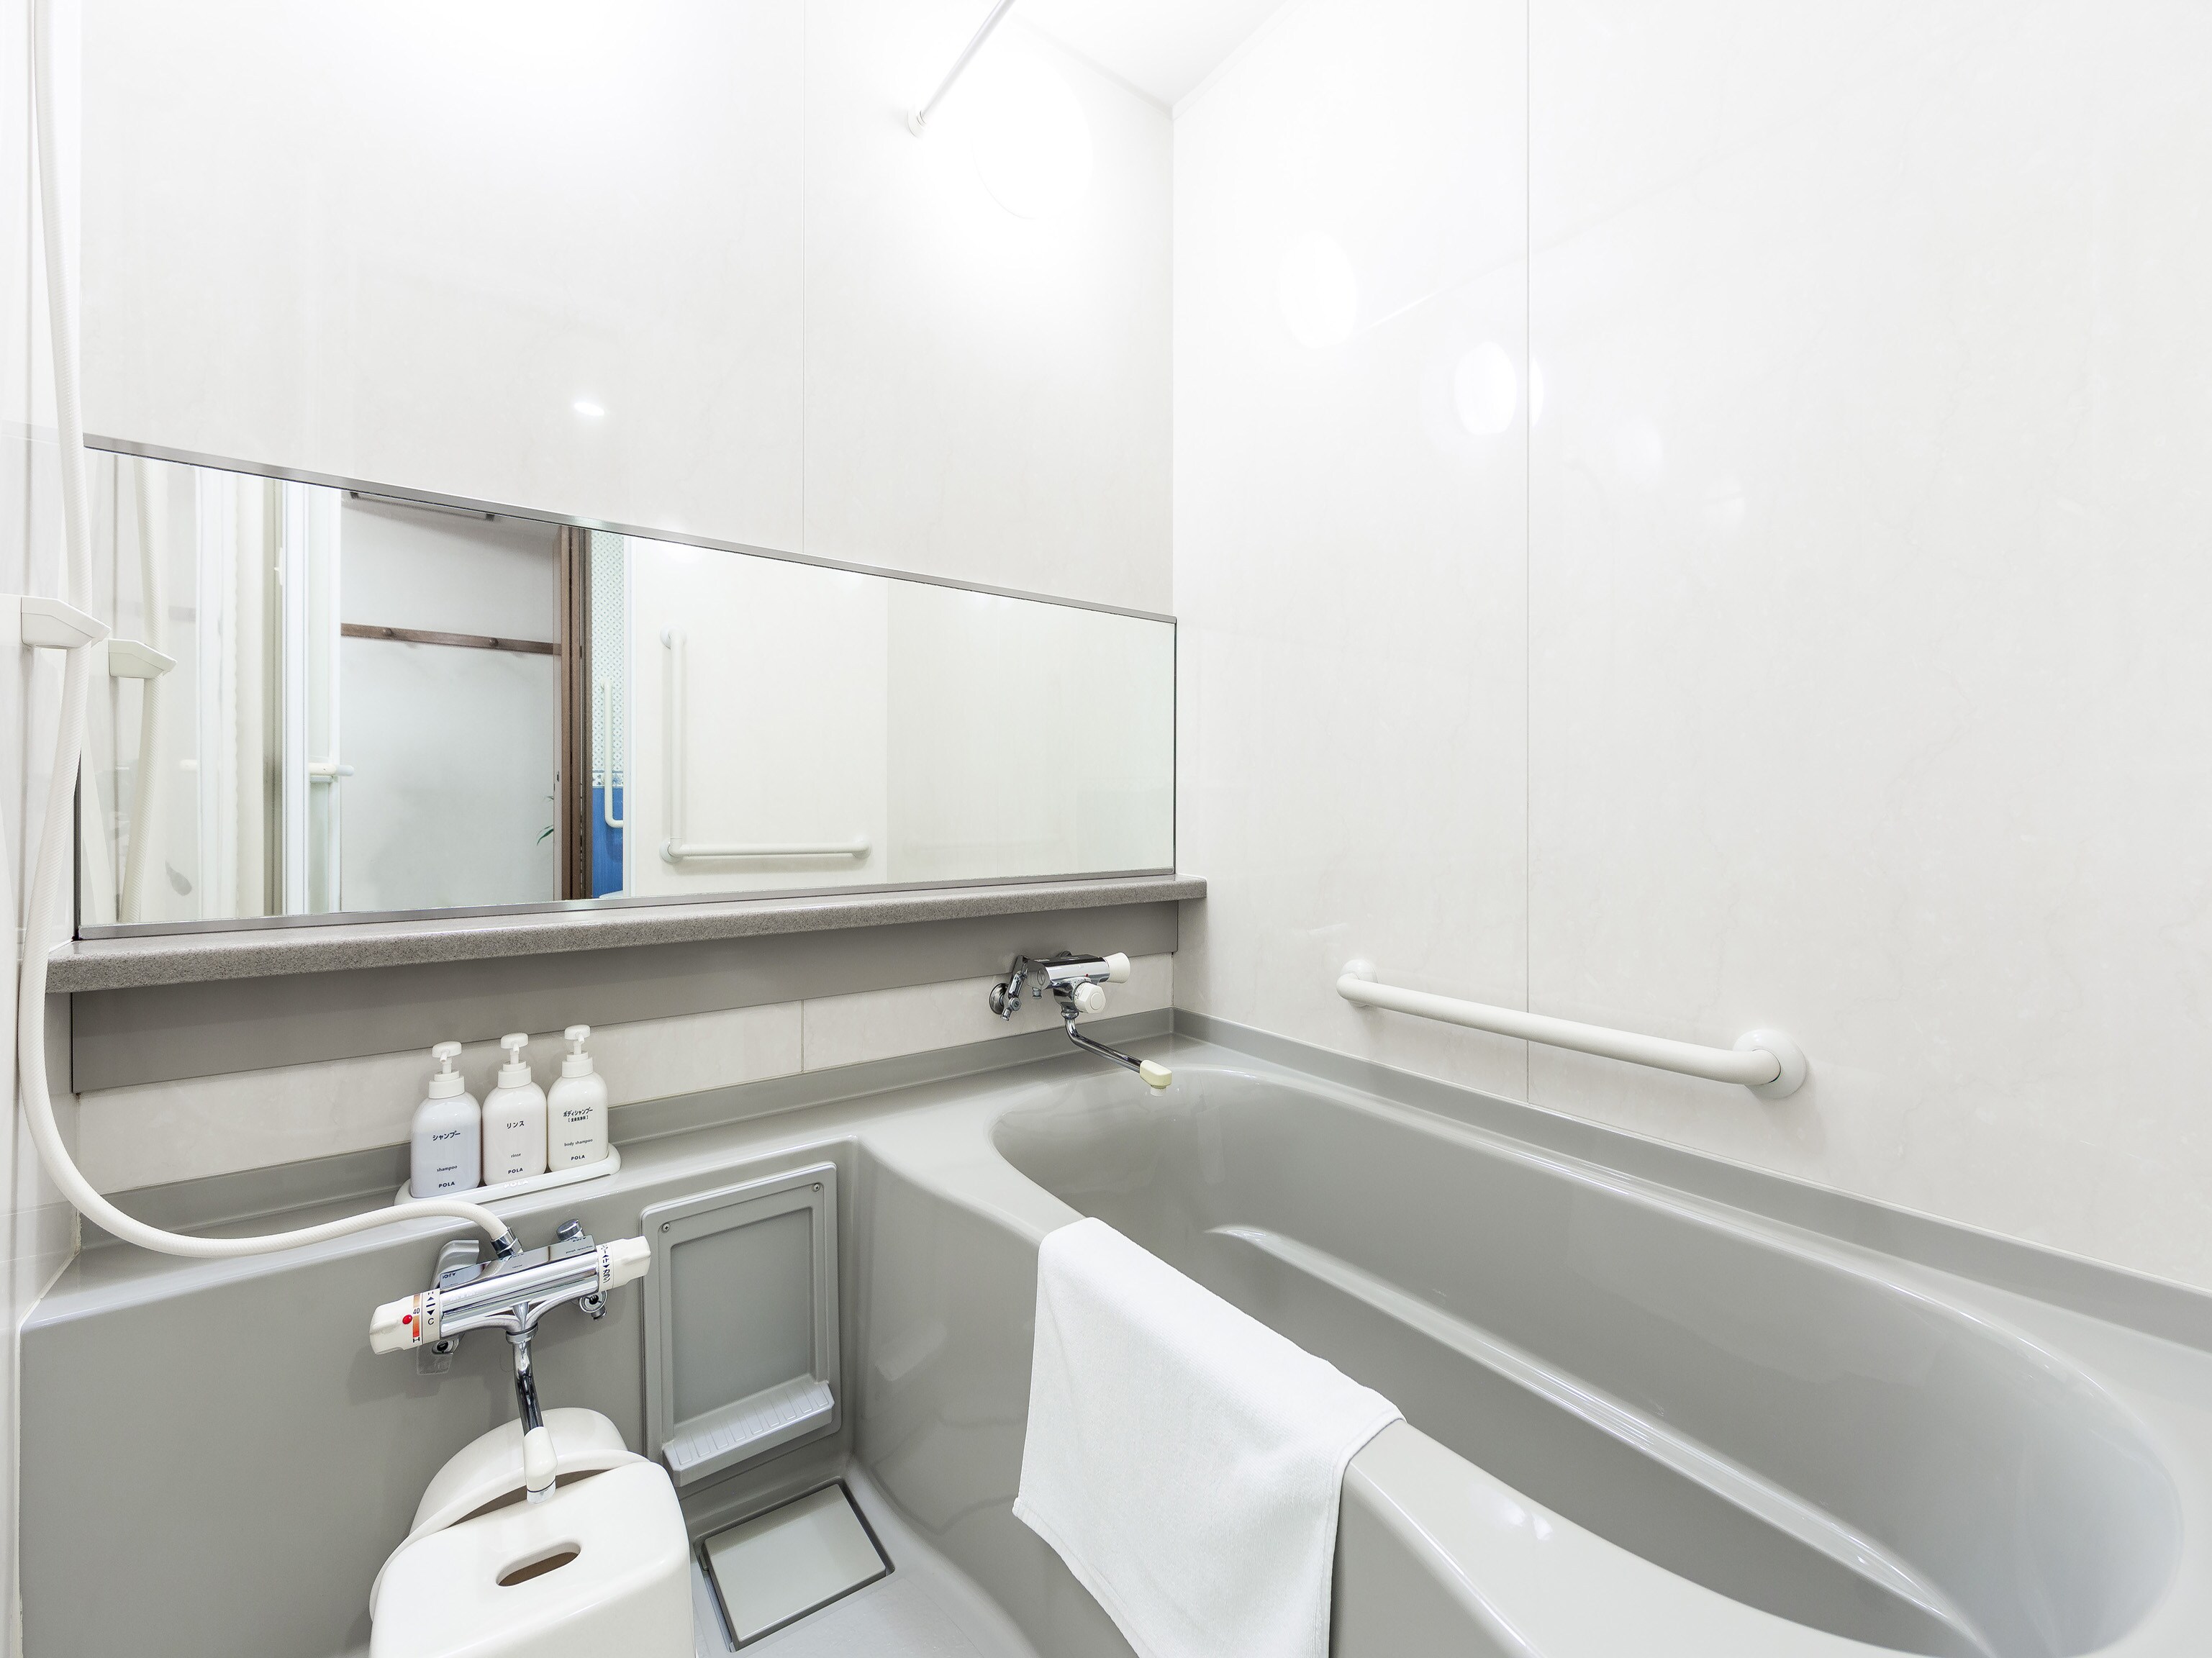 Double room spacious bathroom designed individually